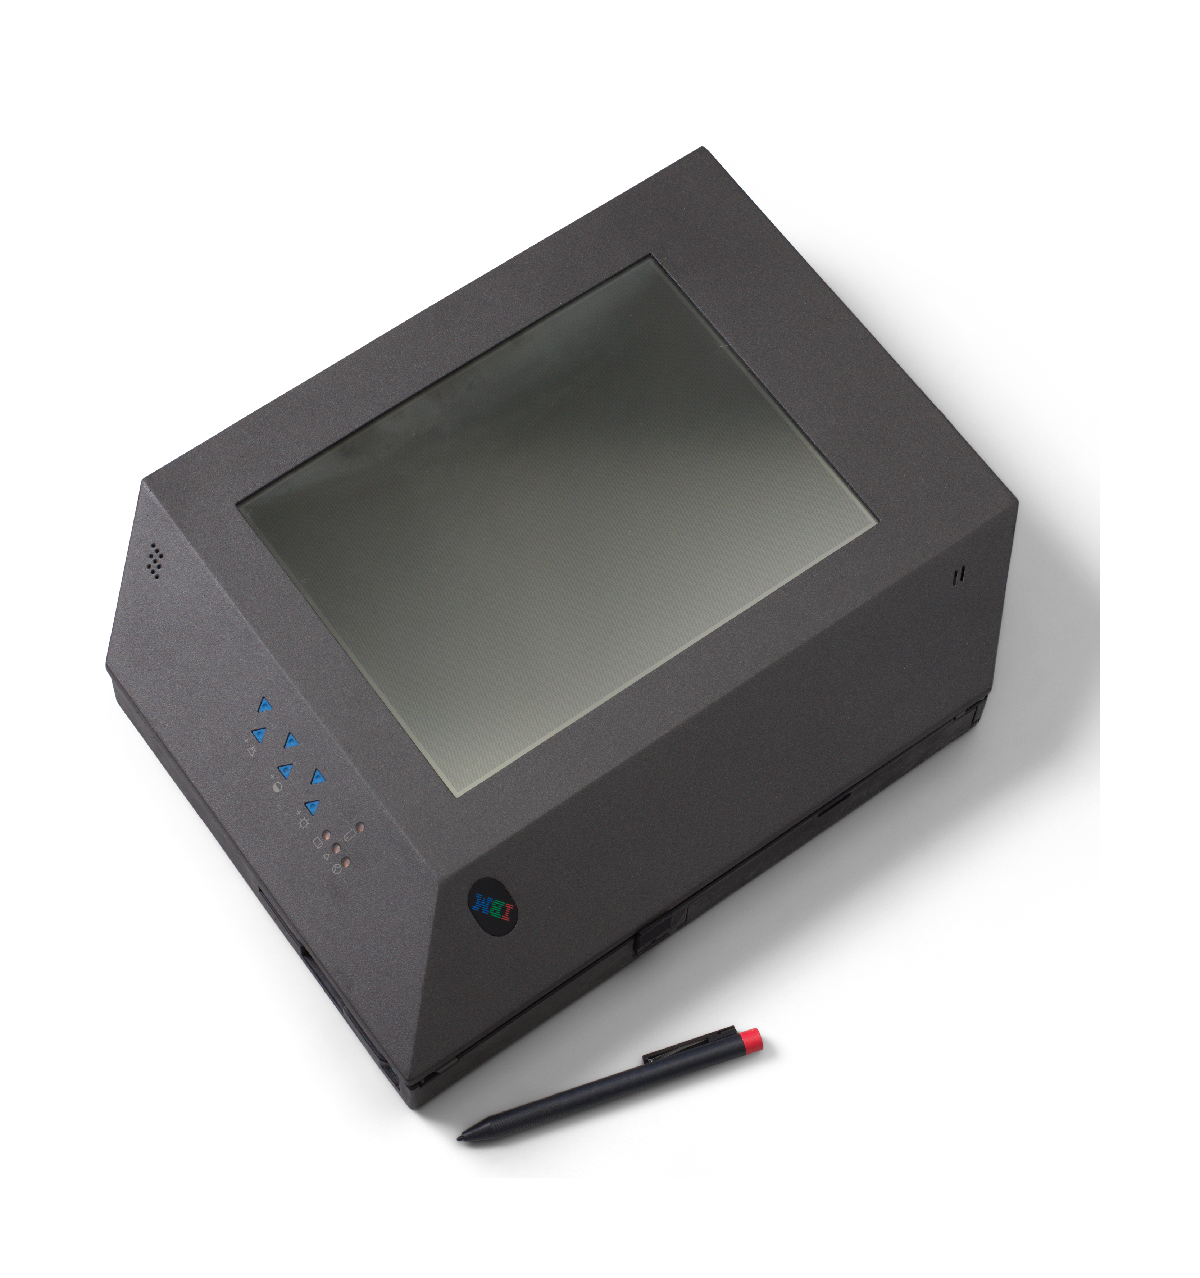 Leapfrog Tablet Computer Prototype, 1992